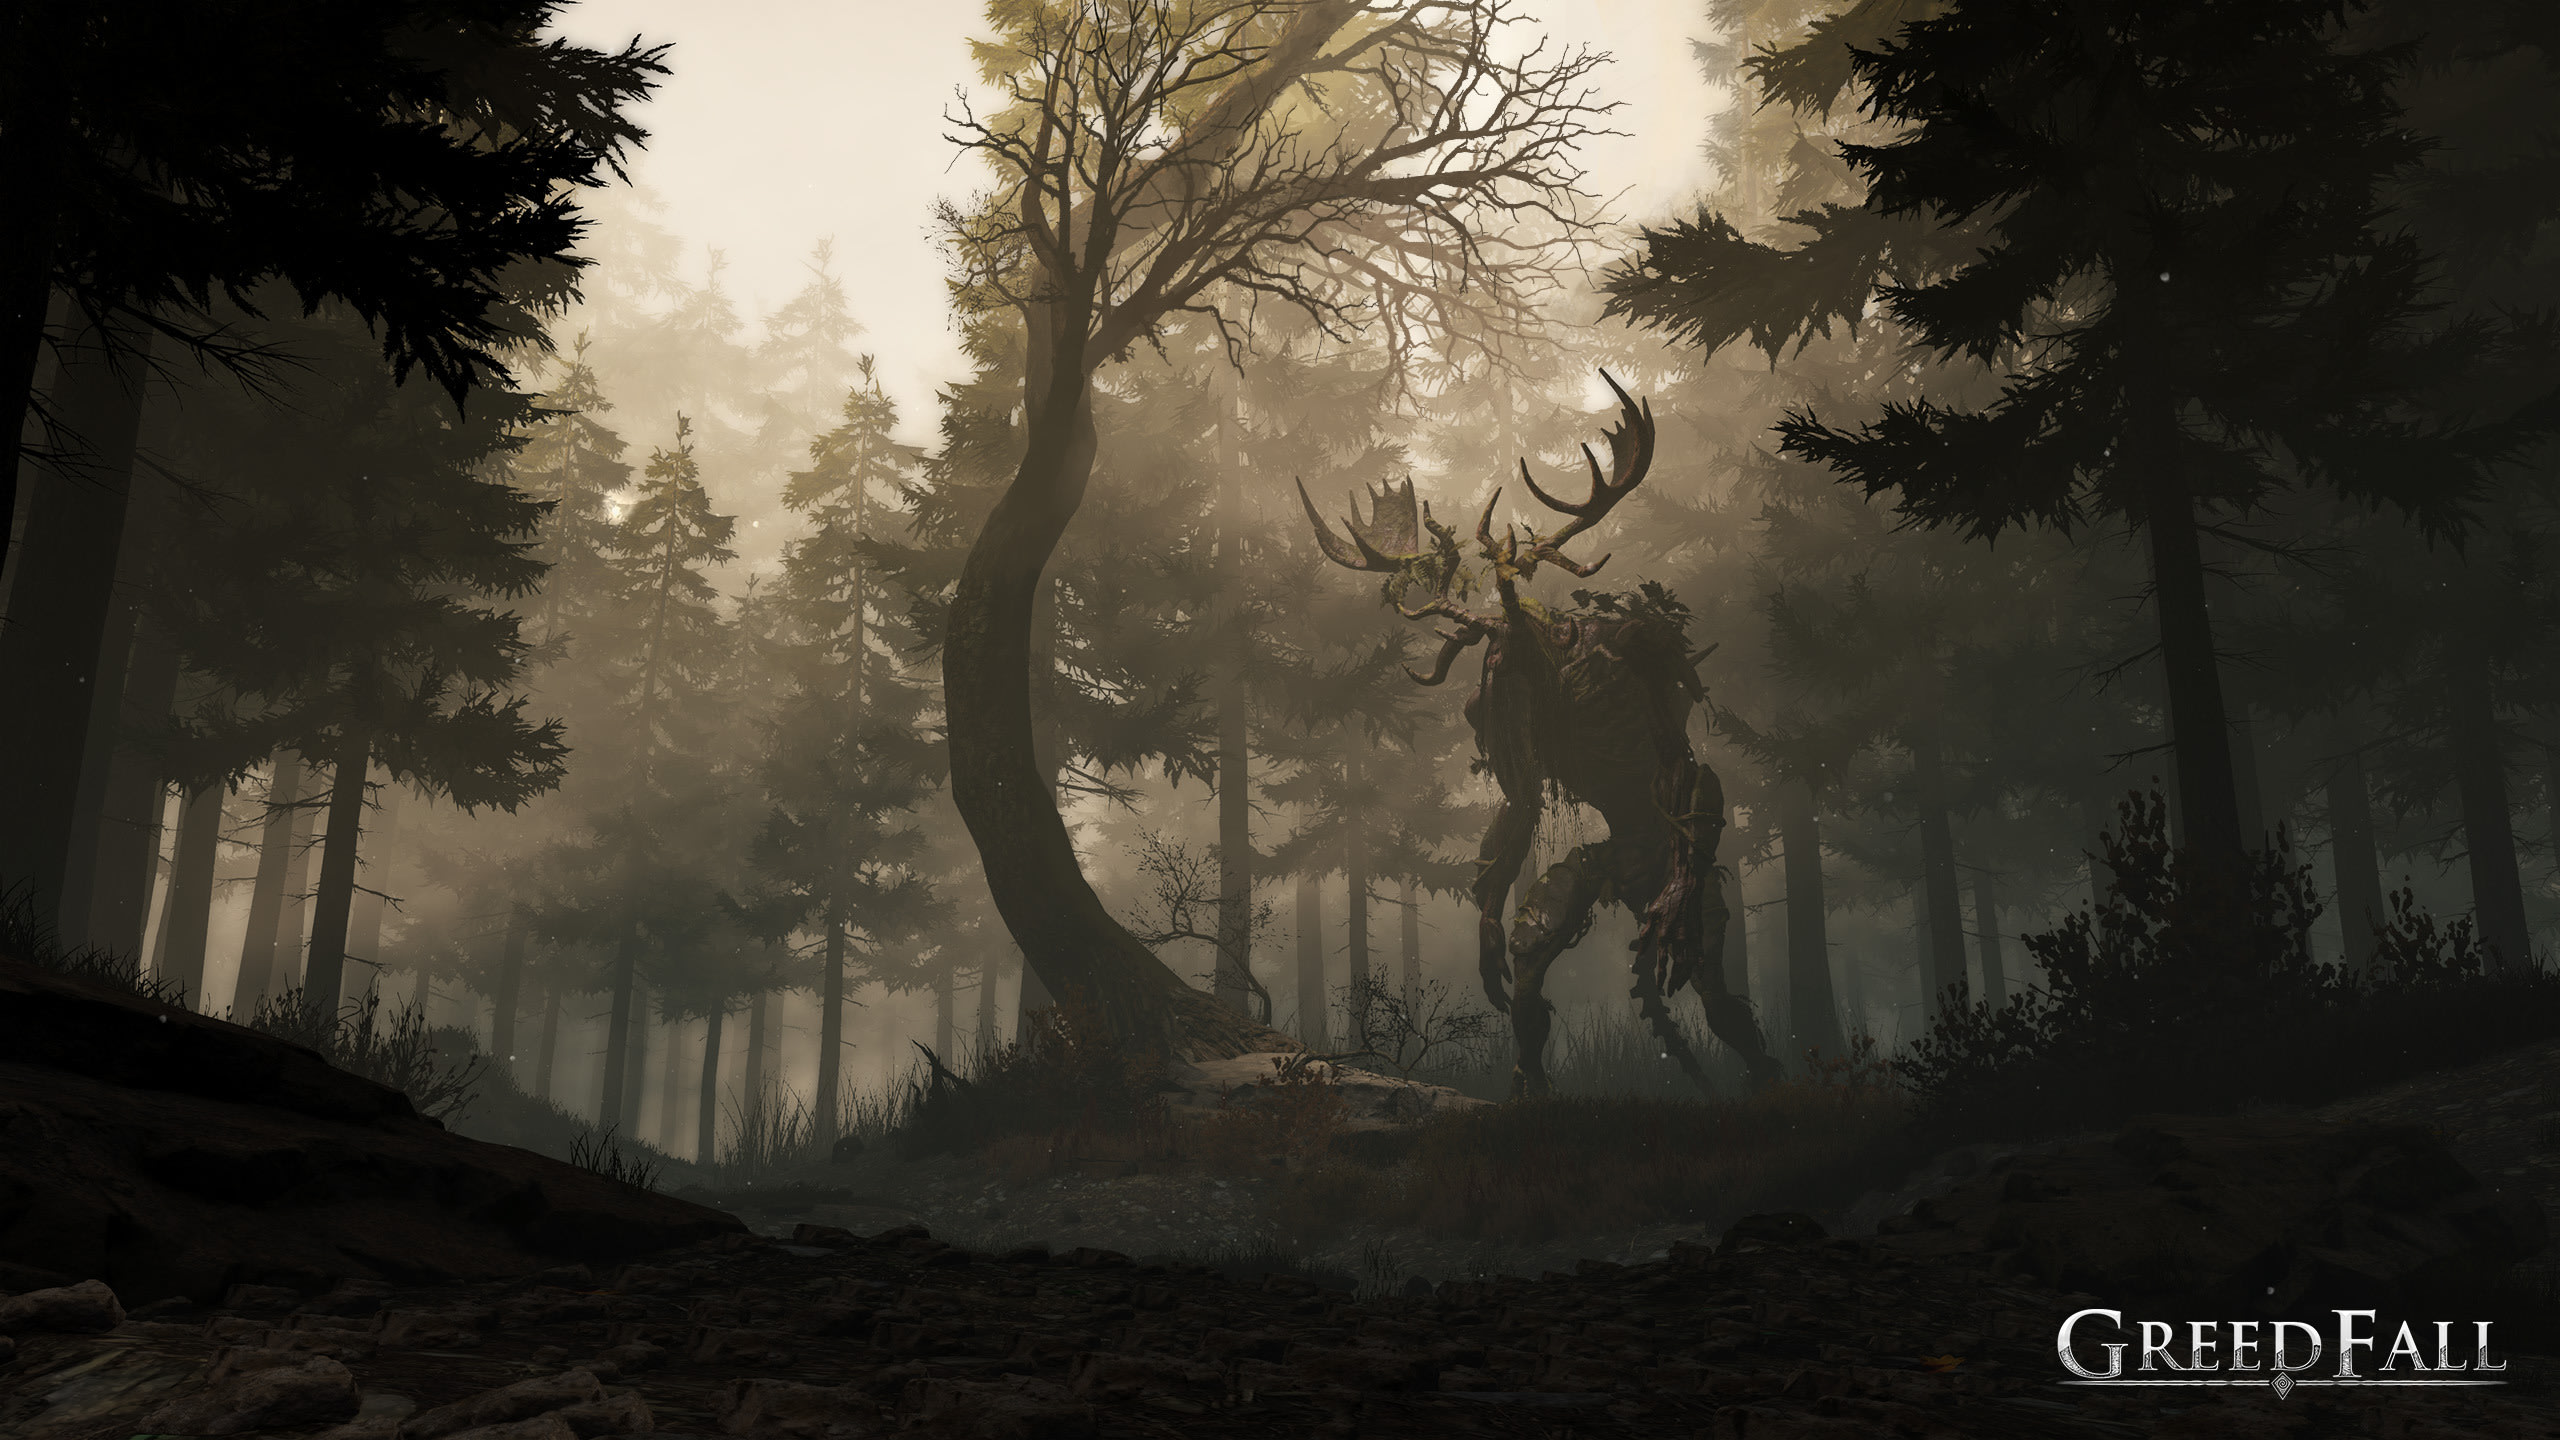 General 2560x1440 Greedfall video games dark forest fantasy art